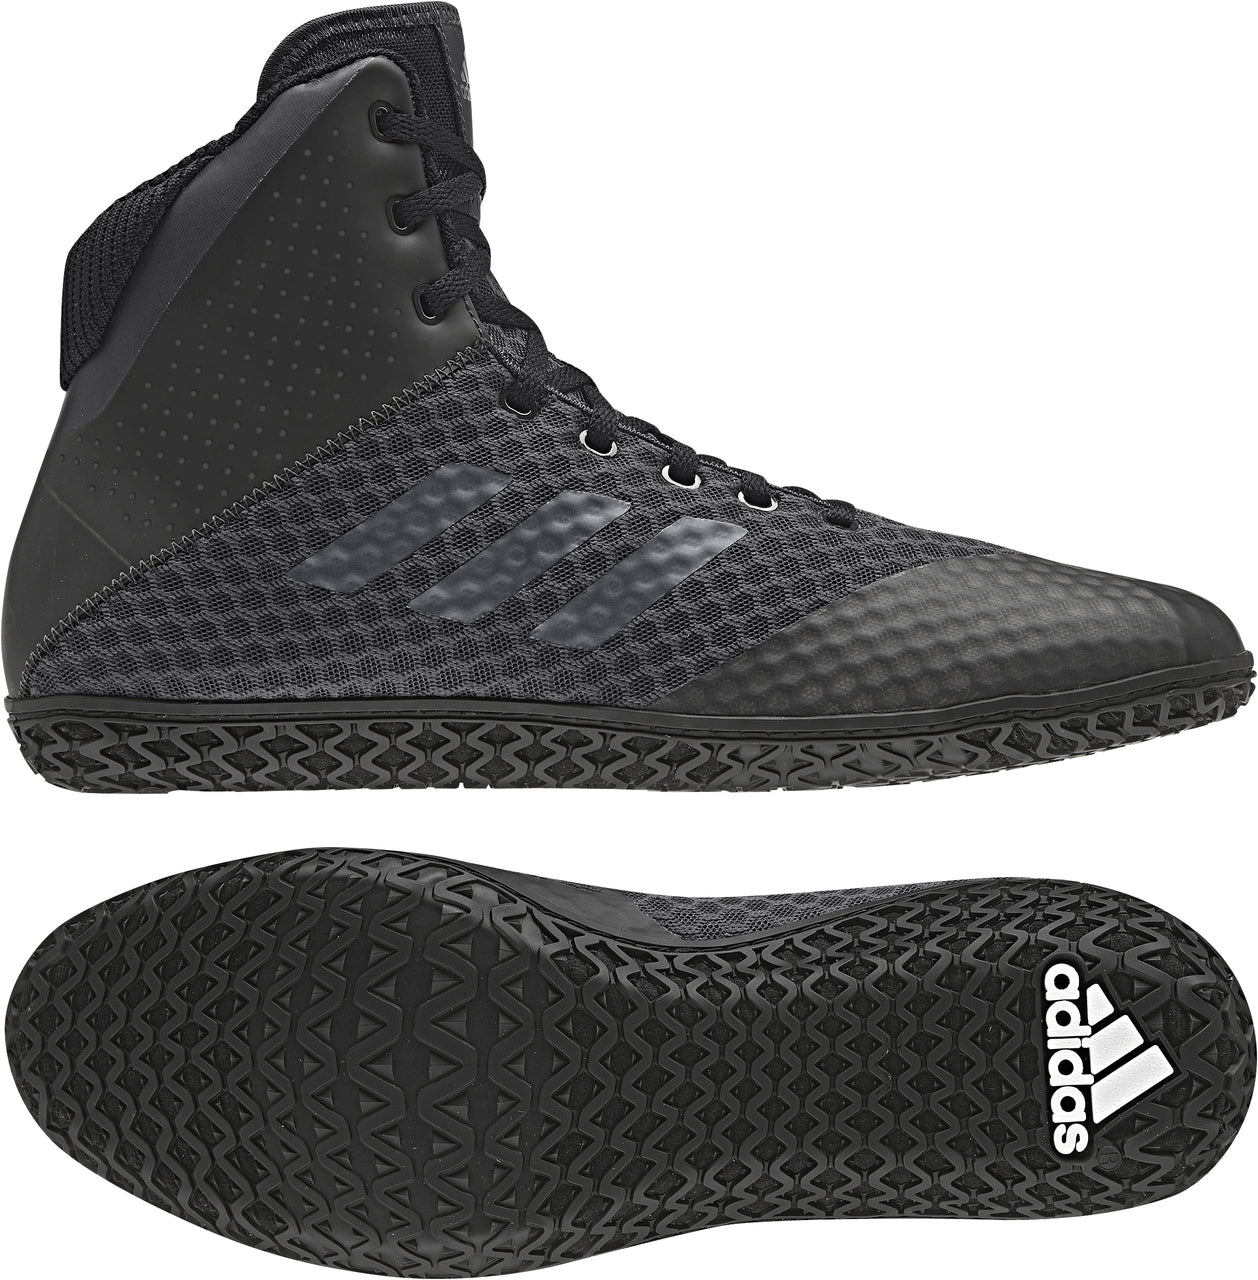 Adidas Wrestling shoes mat 4. black carbon, AC6971